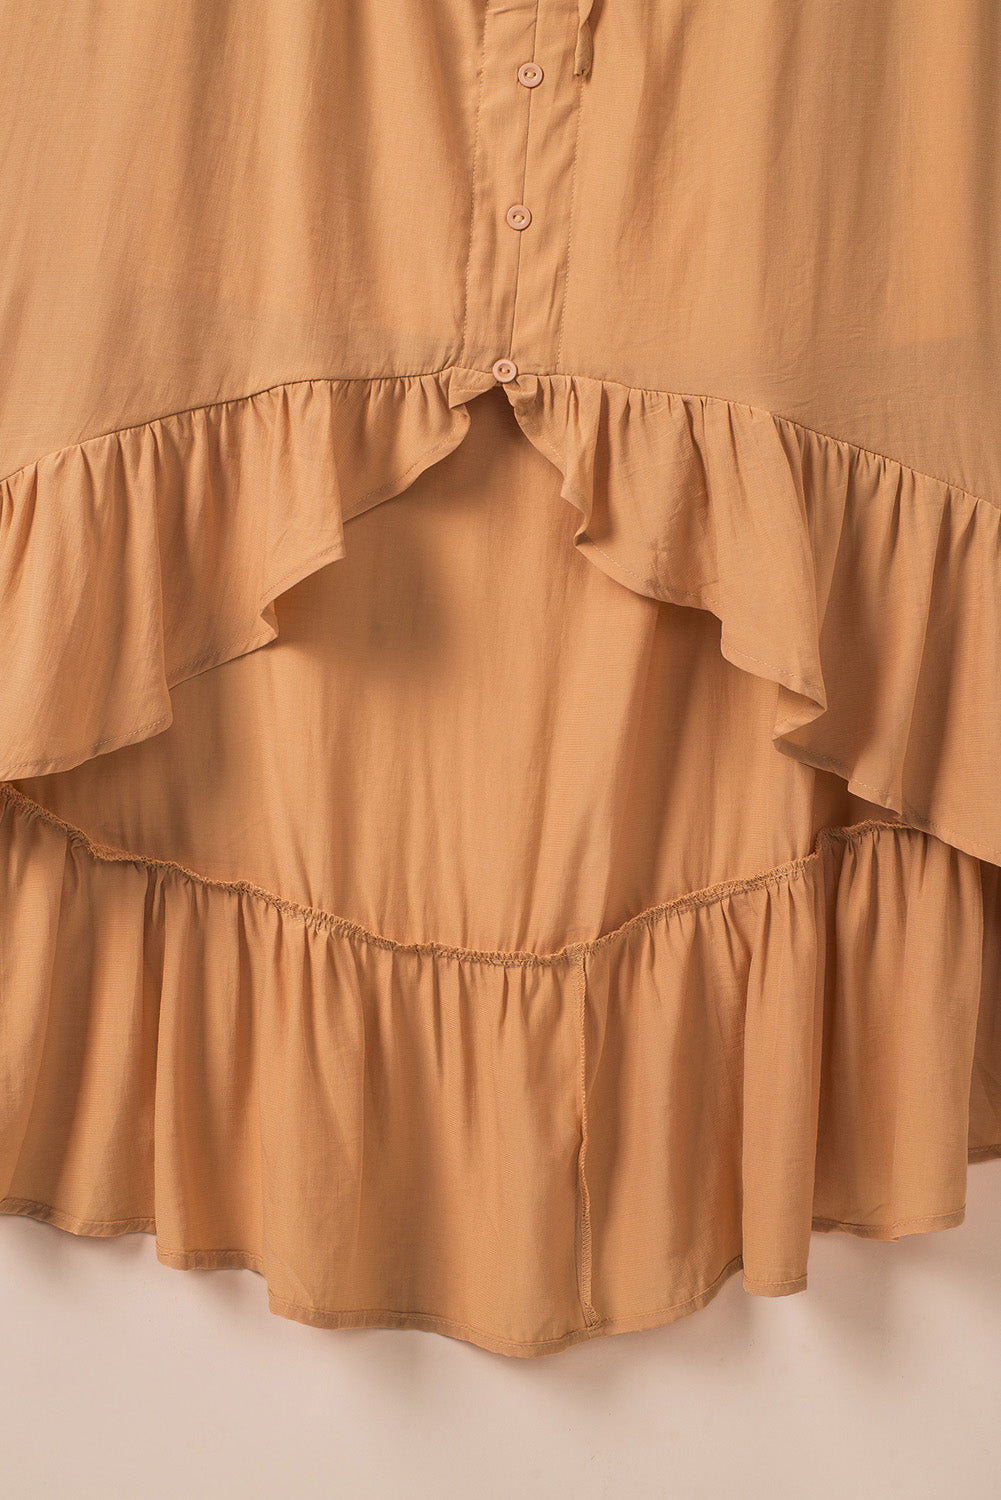 Apricot Glaze High Low Off The Shoulder Maxi Dress Maxi Dresses JT's Designer Fashion